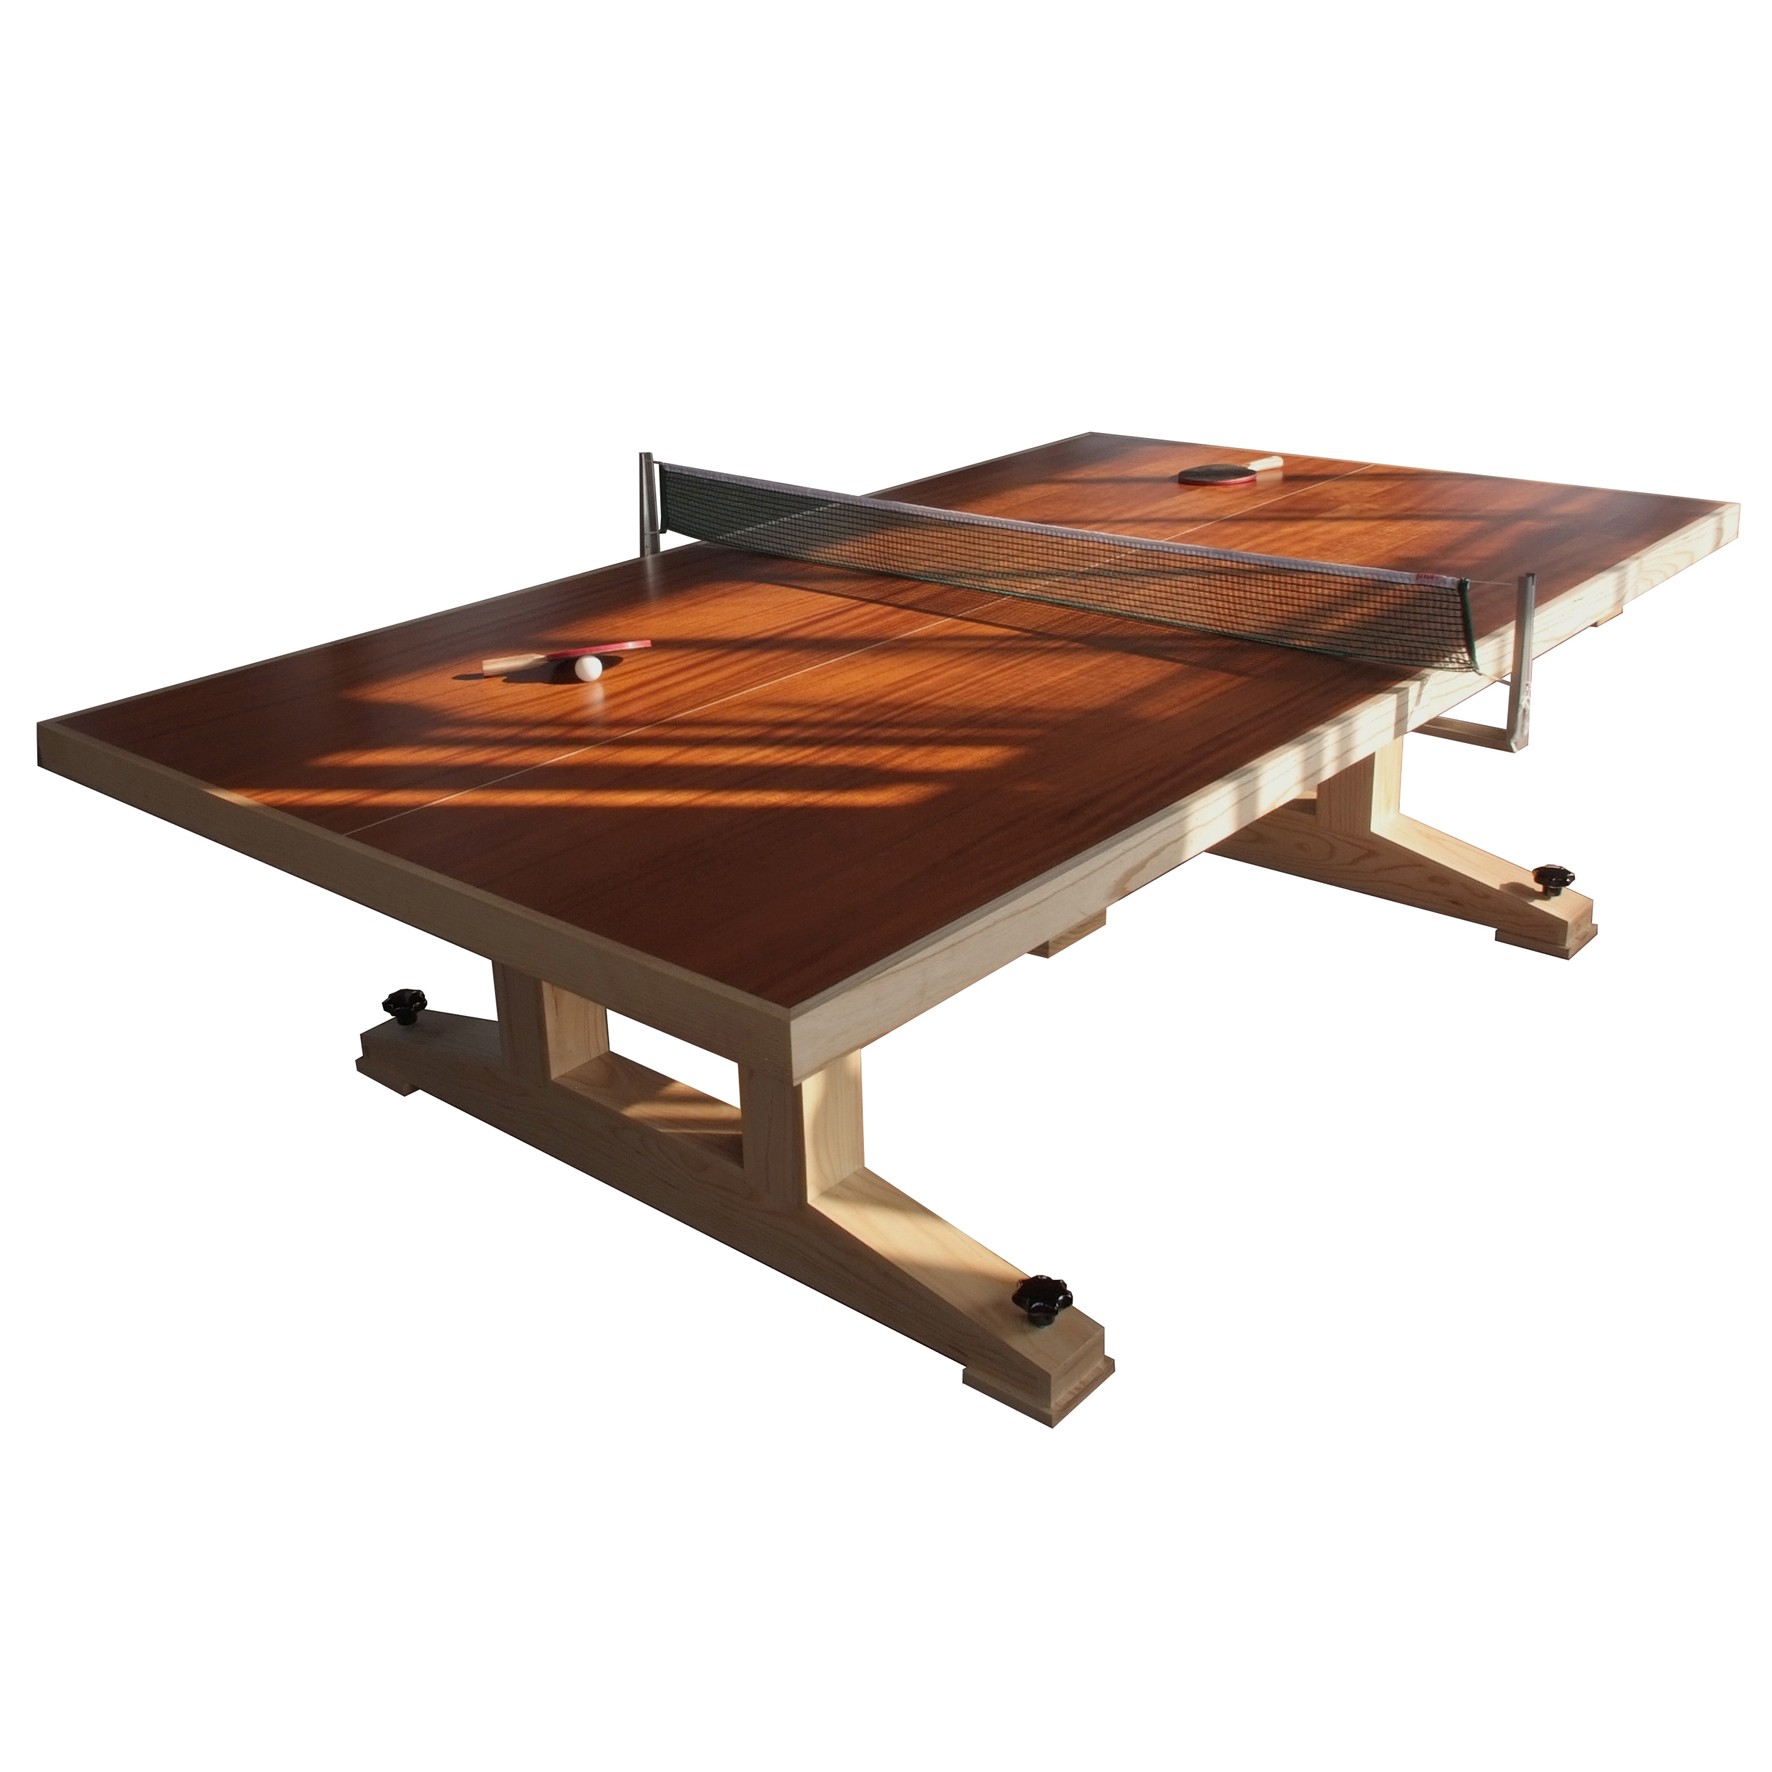 Designer ping pong table 2